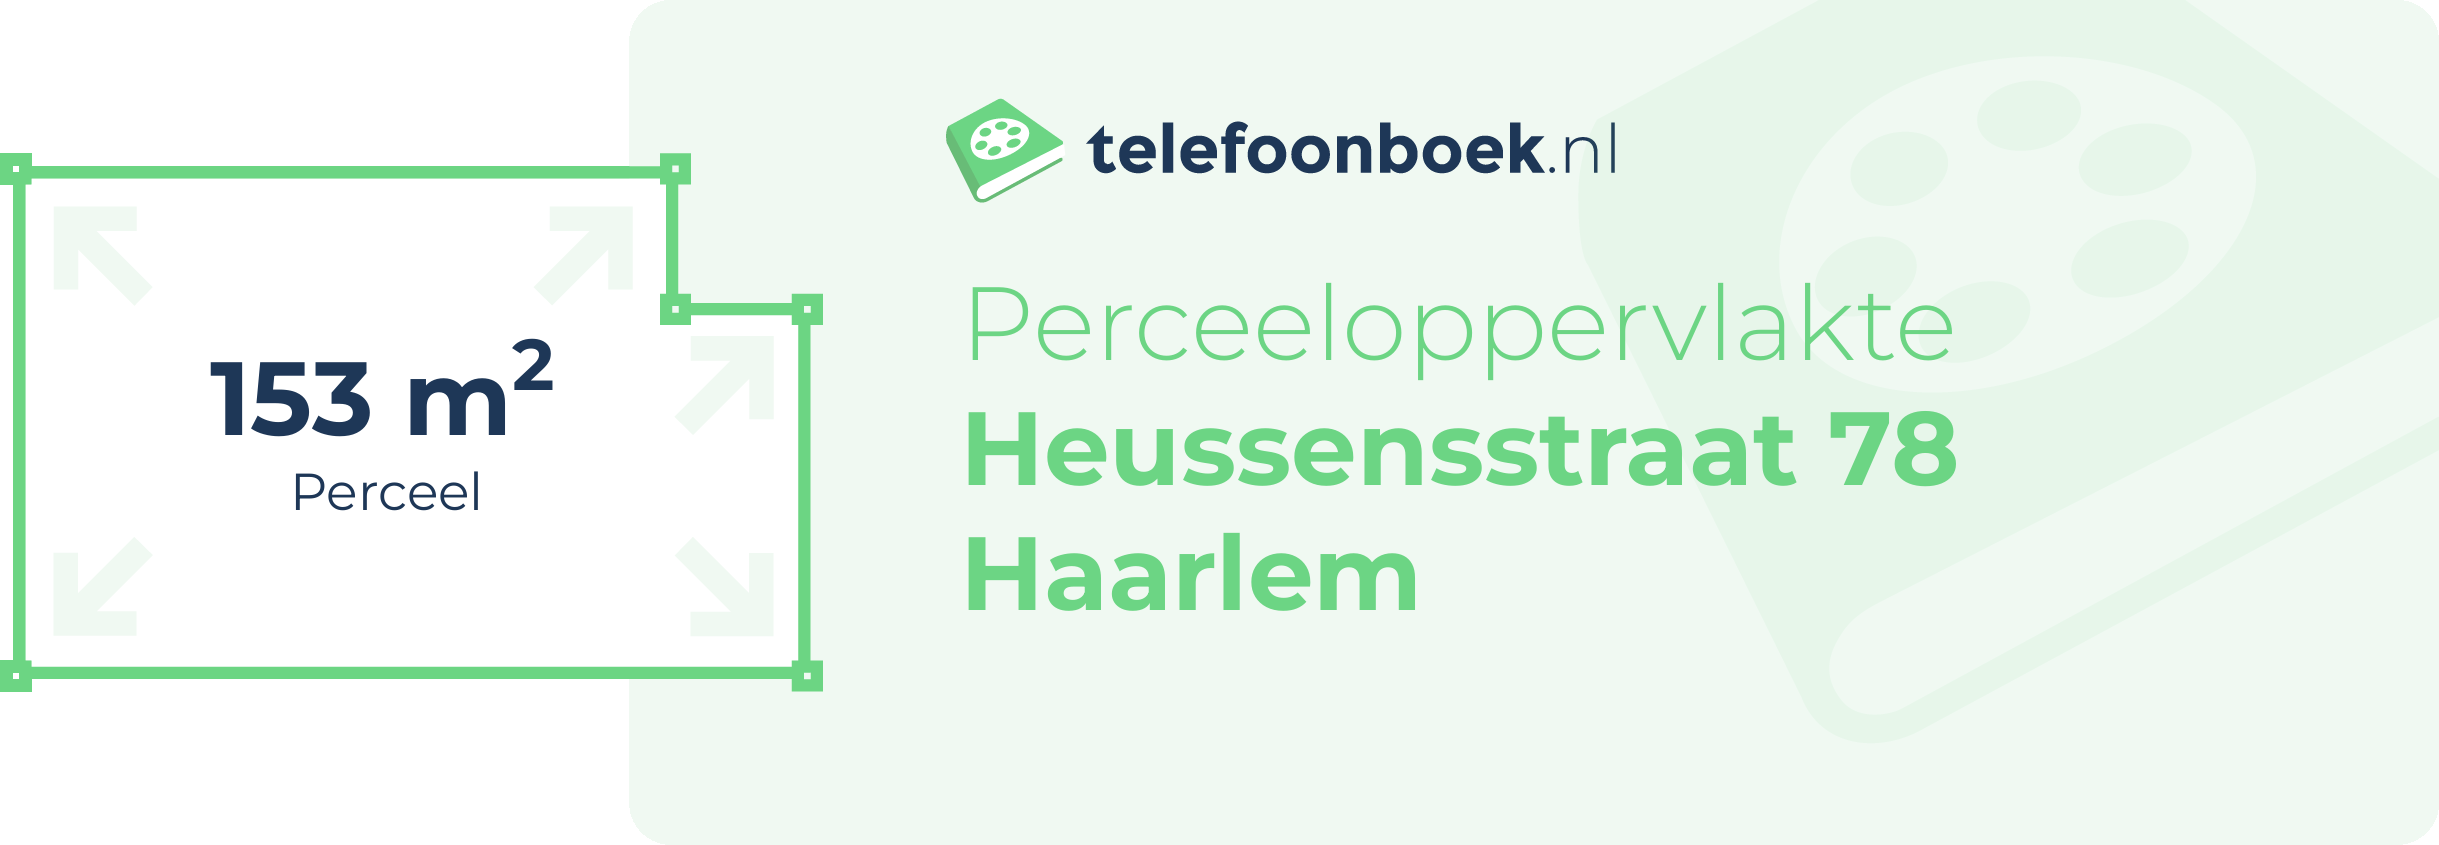 Perceeloppervlakte Heussensstraat 78 Haarlem